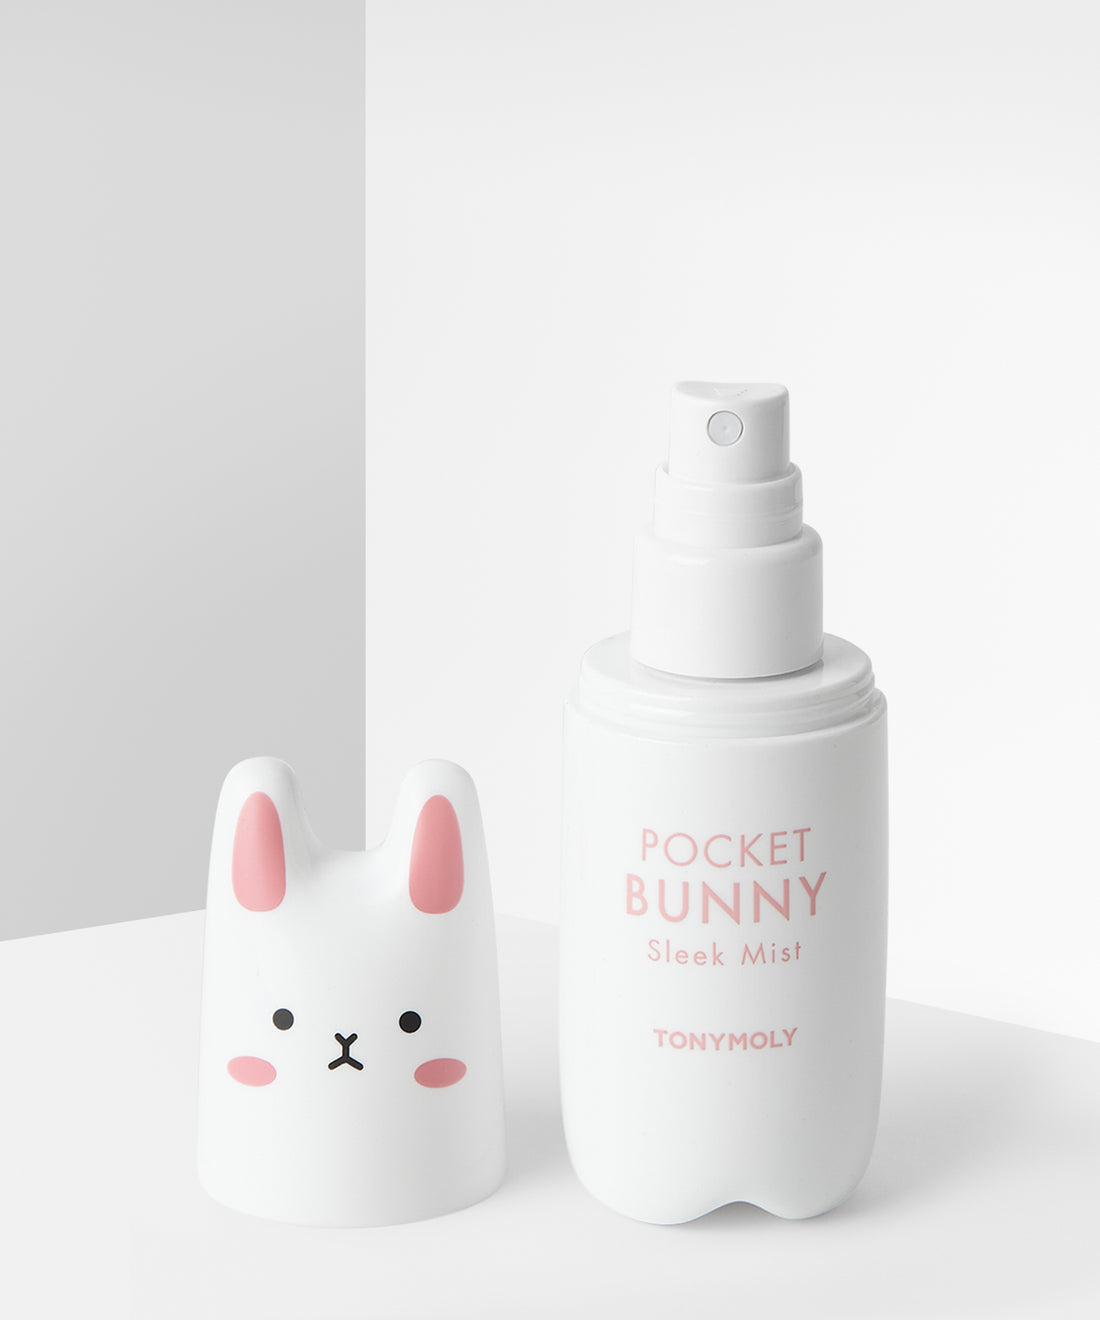 Buy TonyMoly Pocket Bunny Mist in Sleek Mist Online